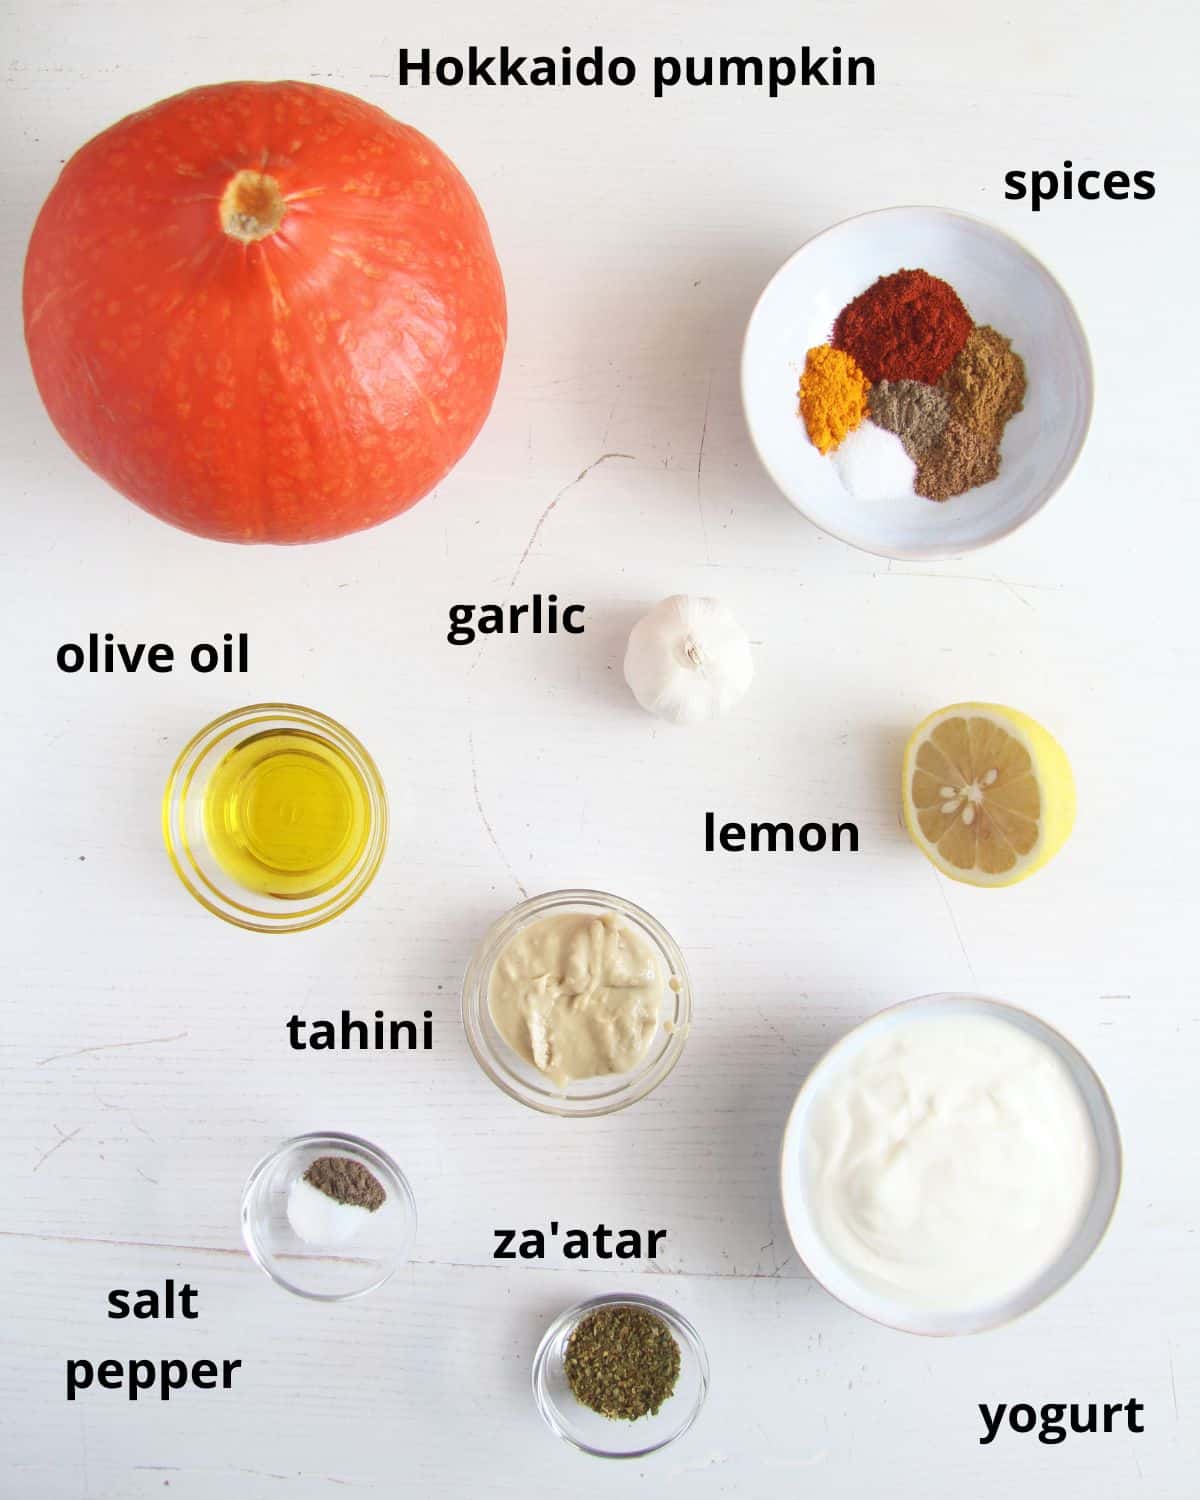 listed ingredients for baking pumpkin and making yogurt tahini dip.